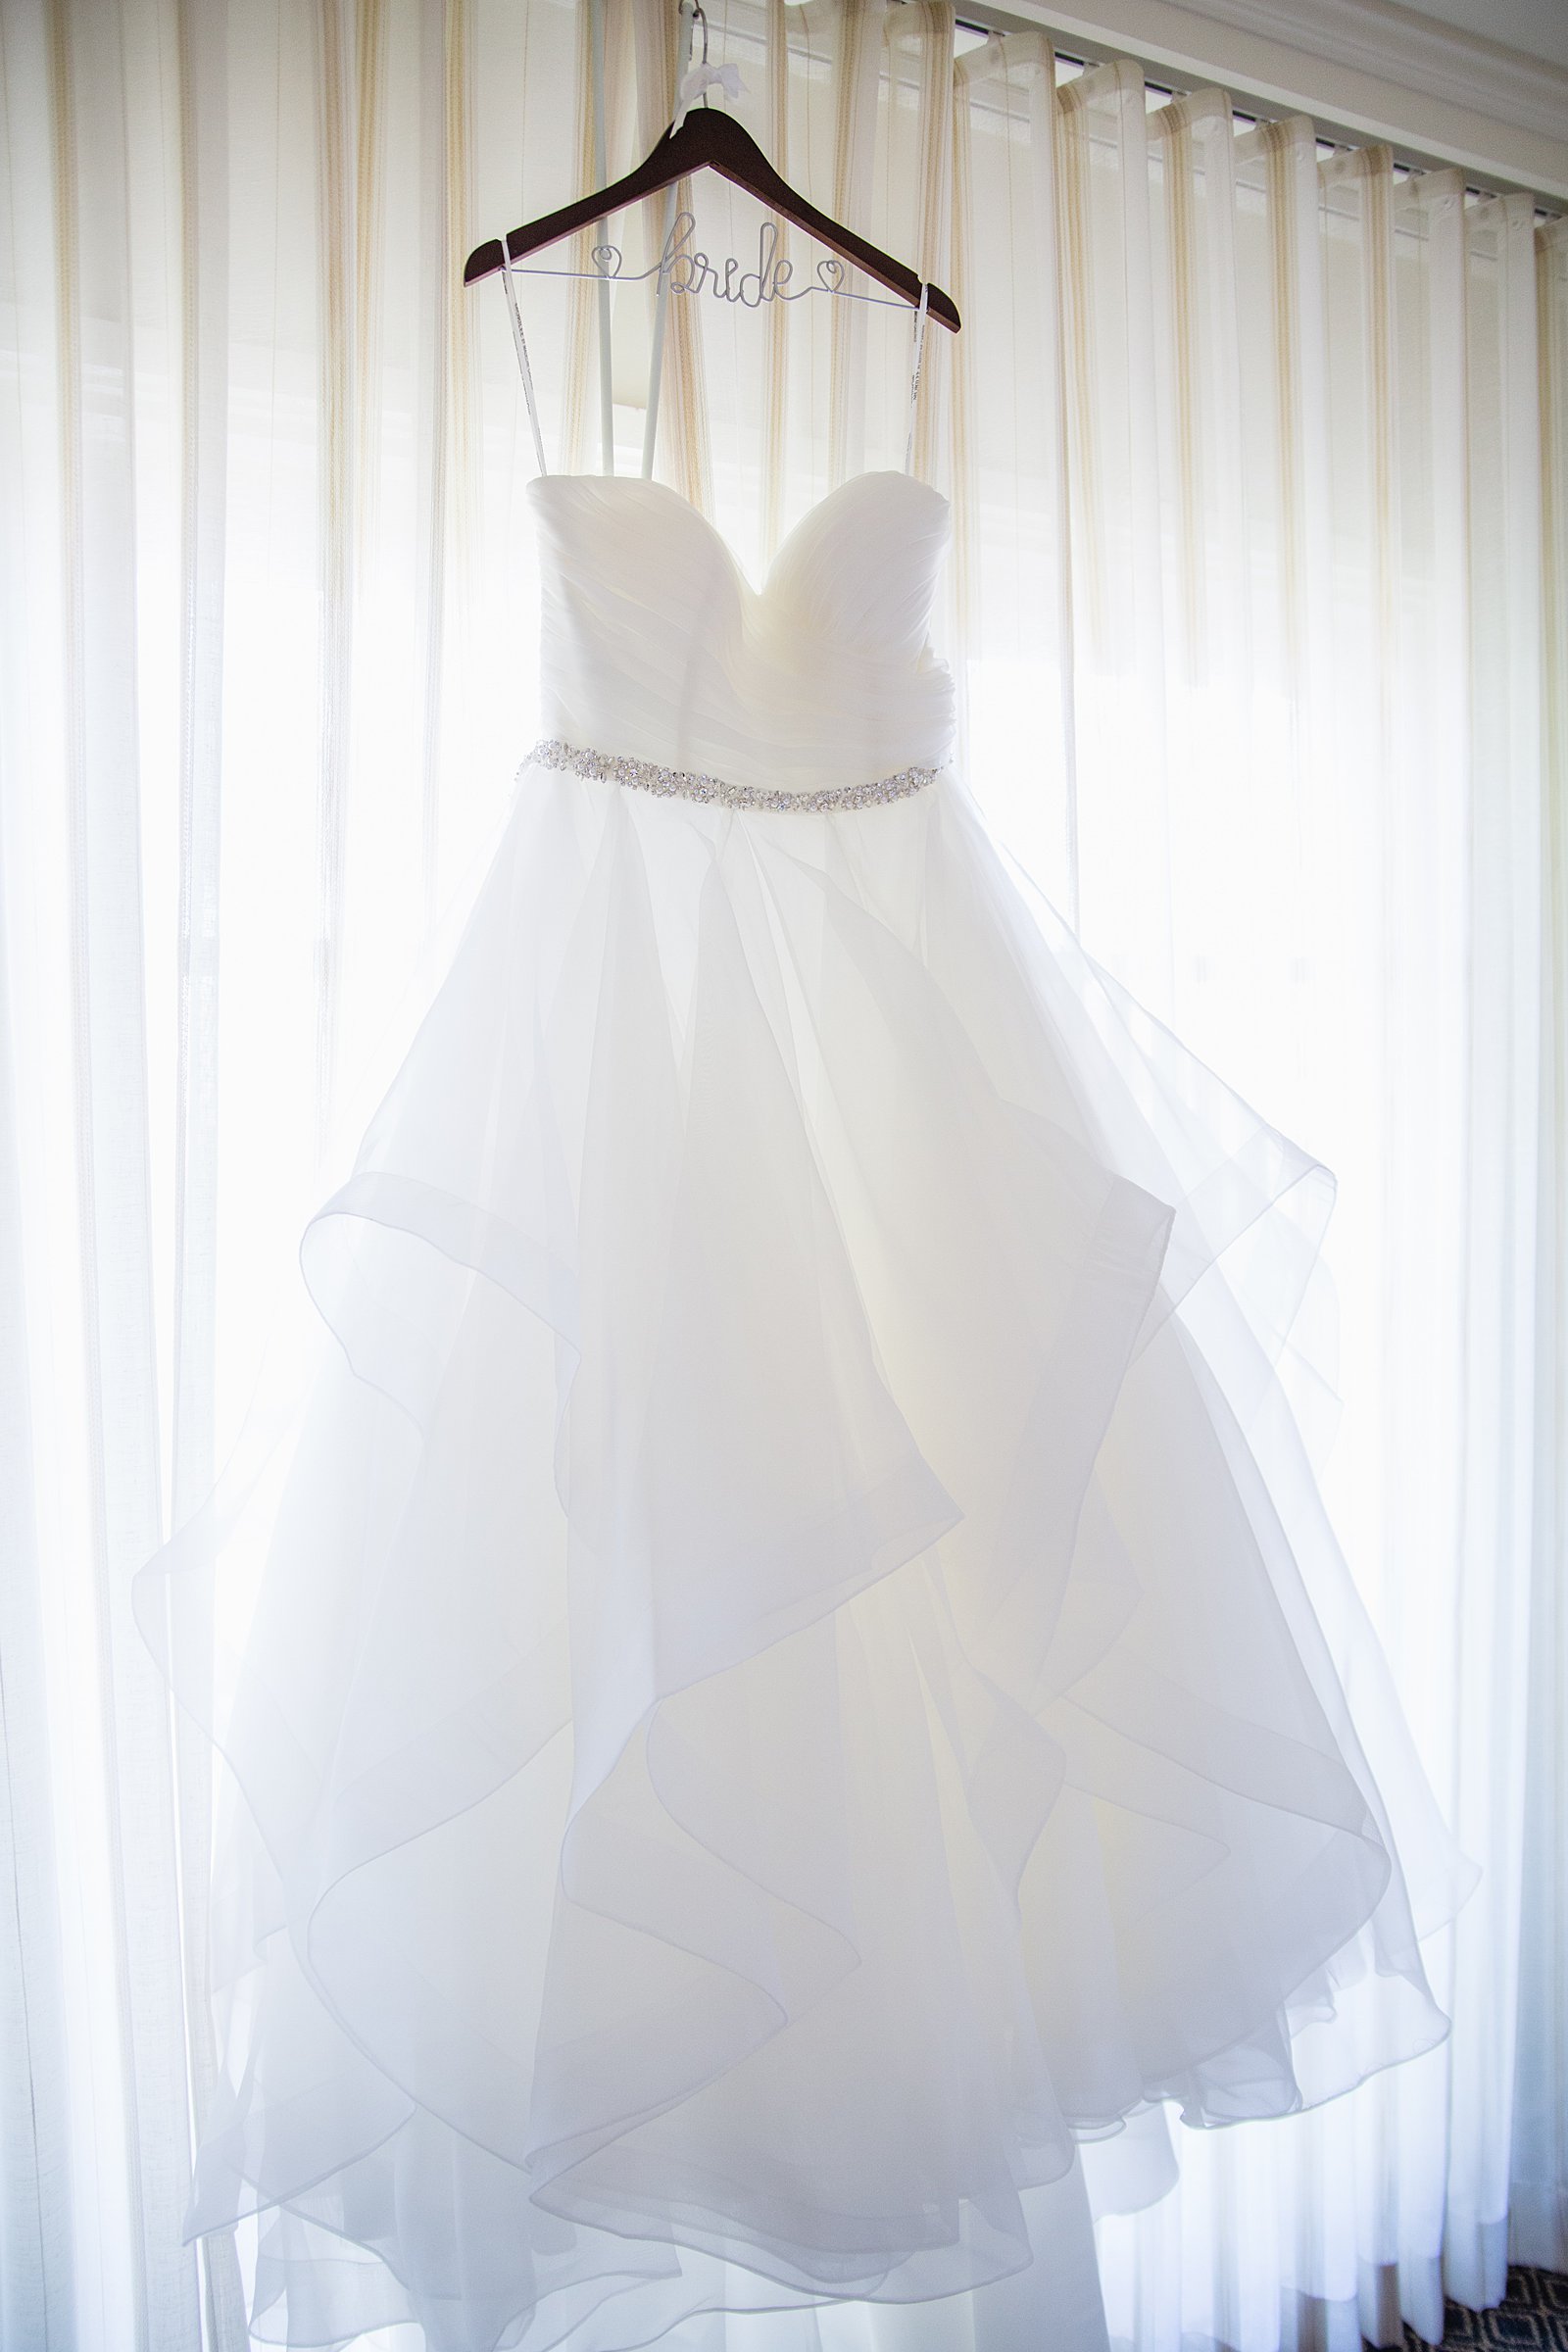 Bride's classic wedding dress for her Arizona Grand Resort wedding by PMA Photography.